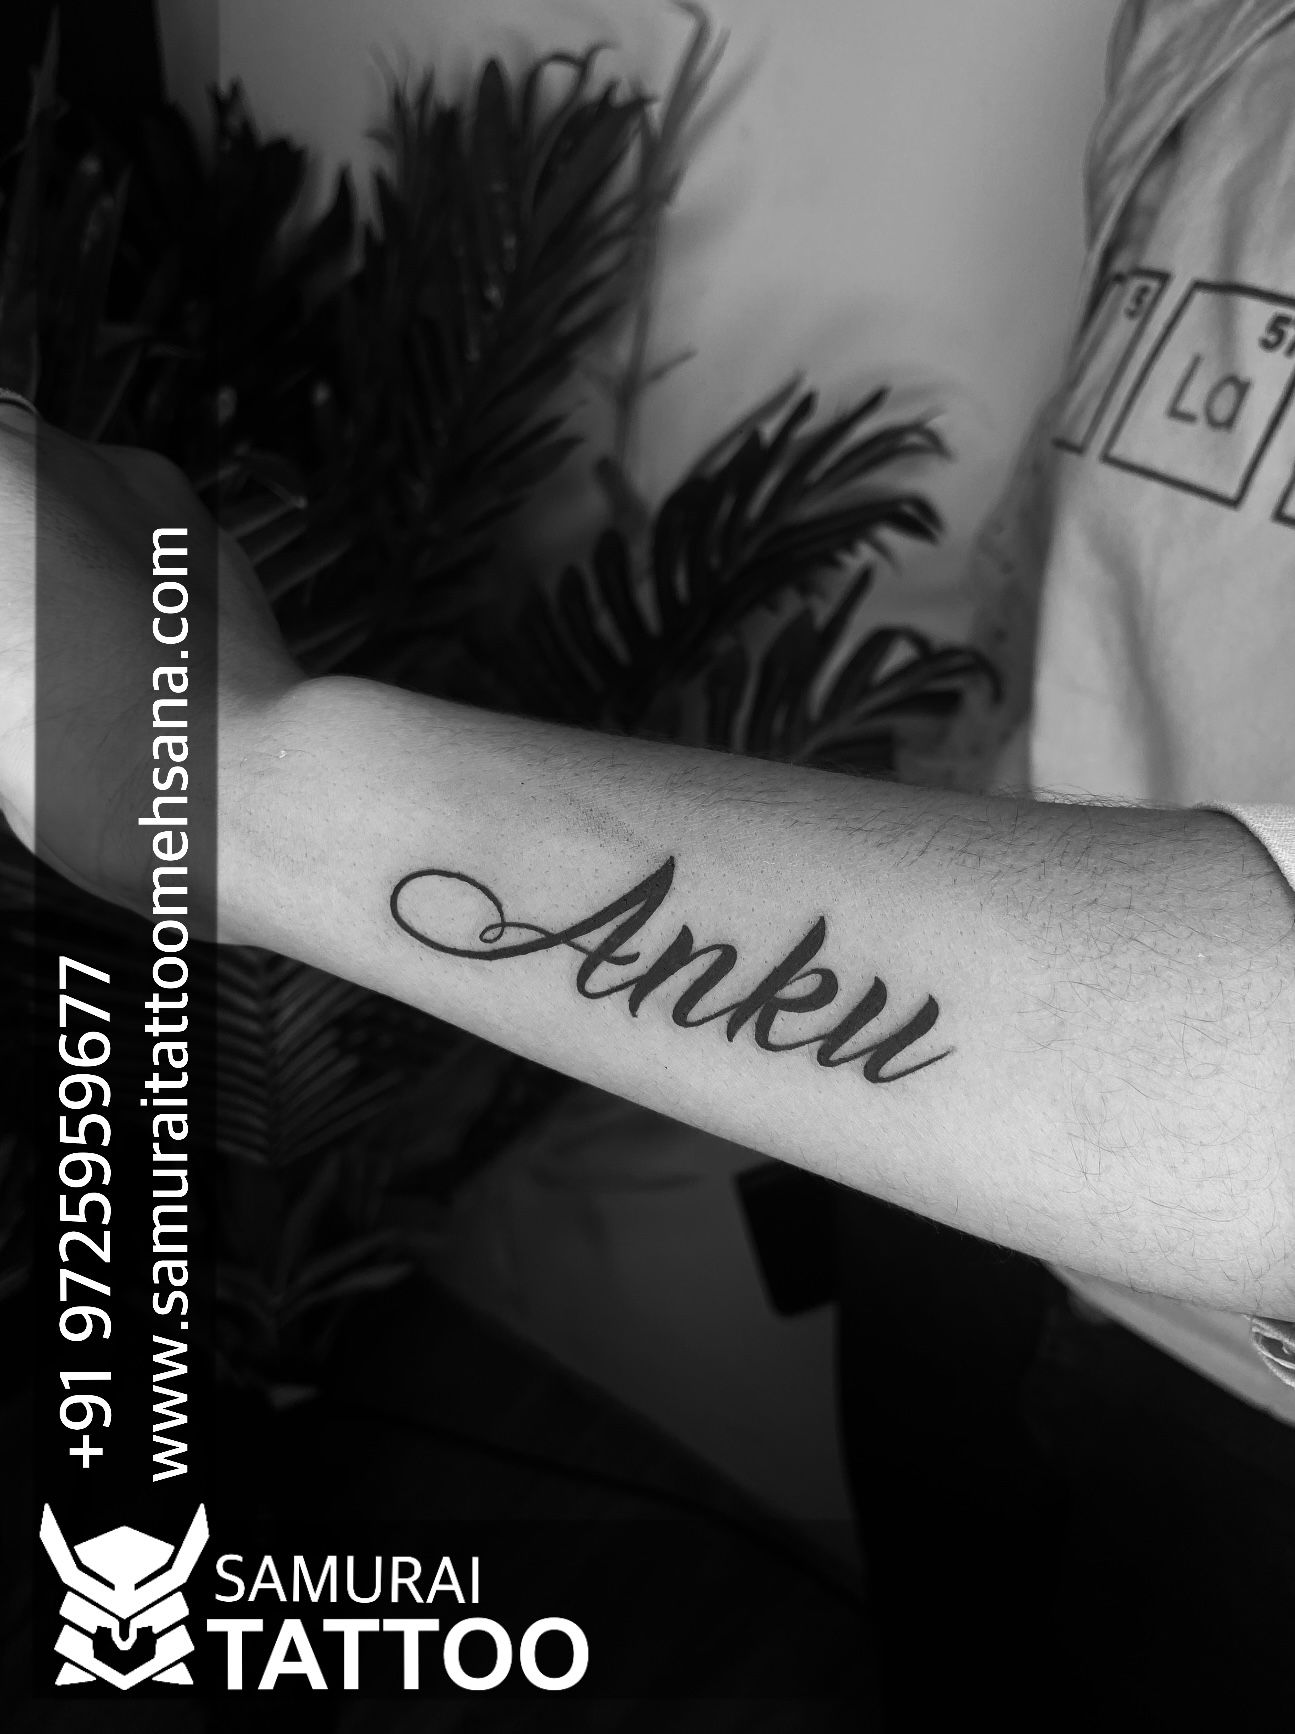 Mom dad name tattoo Yogesh jadhav | Name tattoo, Sleeve tattoos, Tattoos